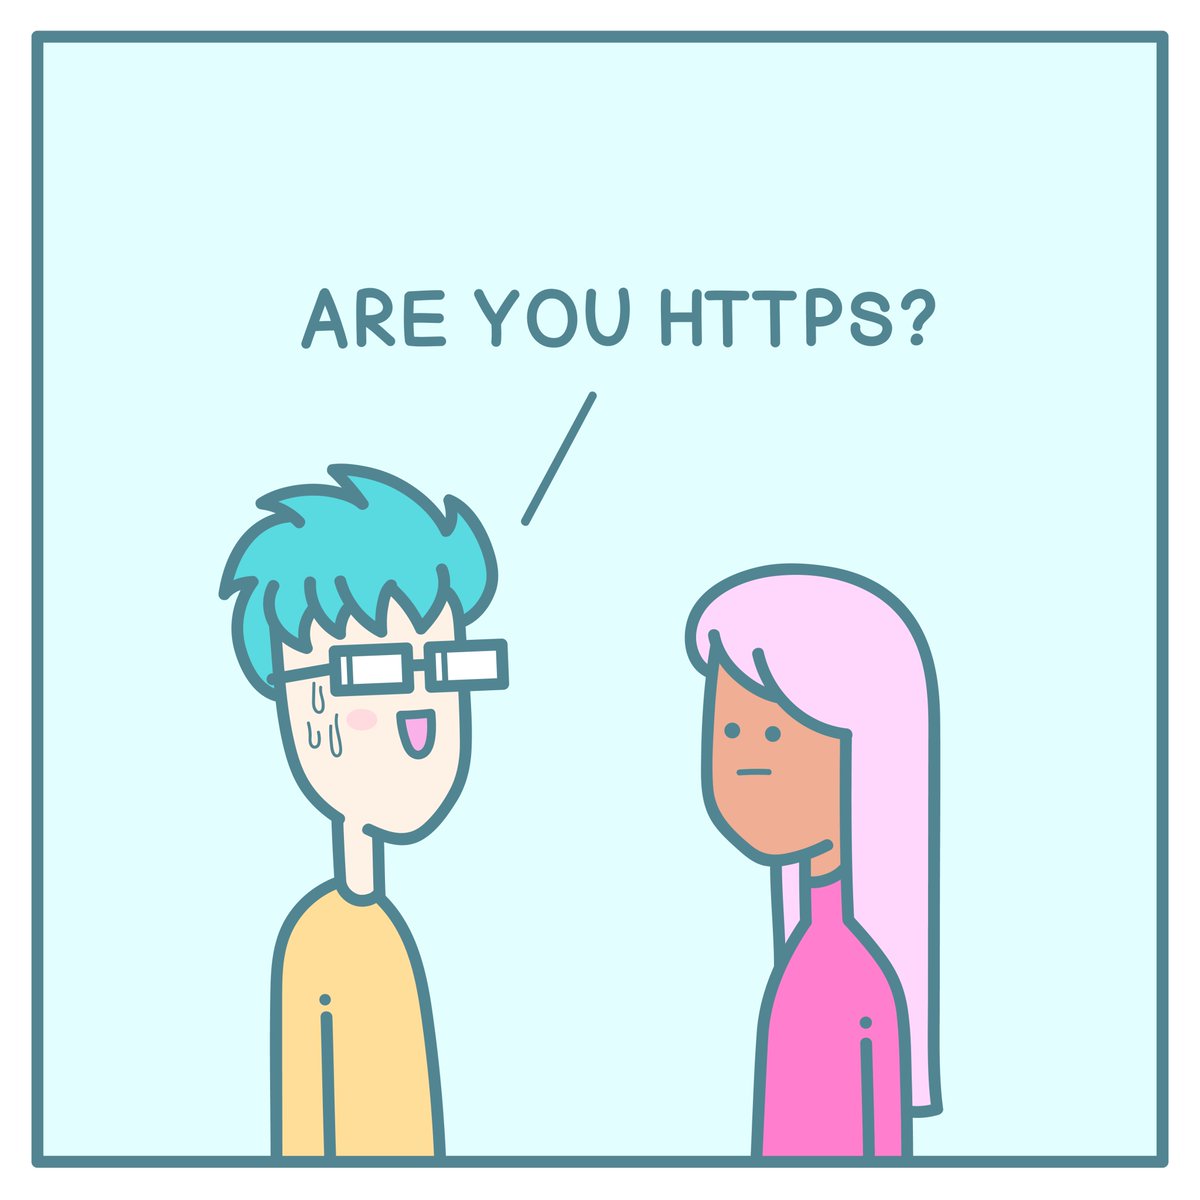 Are you HTTPS? #webcomics #comics #FridayFeeling crystallize.com/comics/are-you…